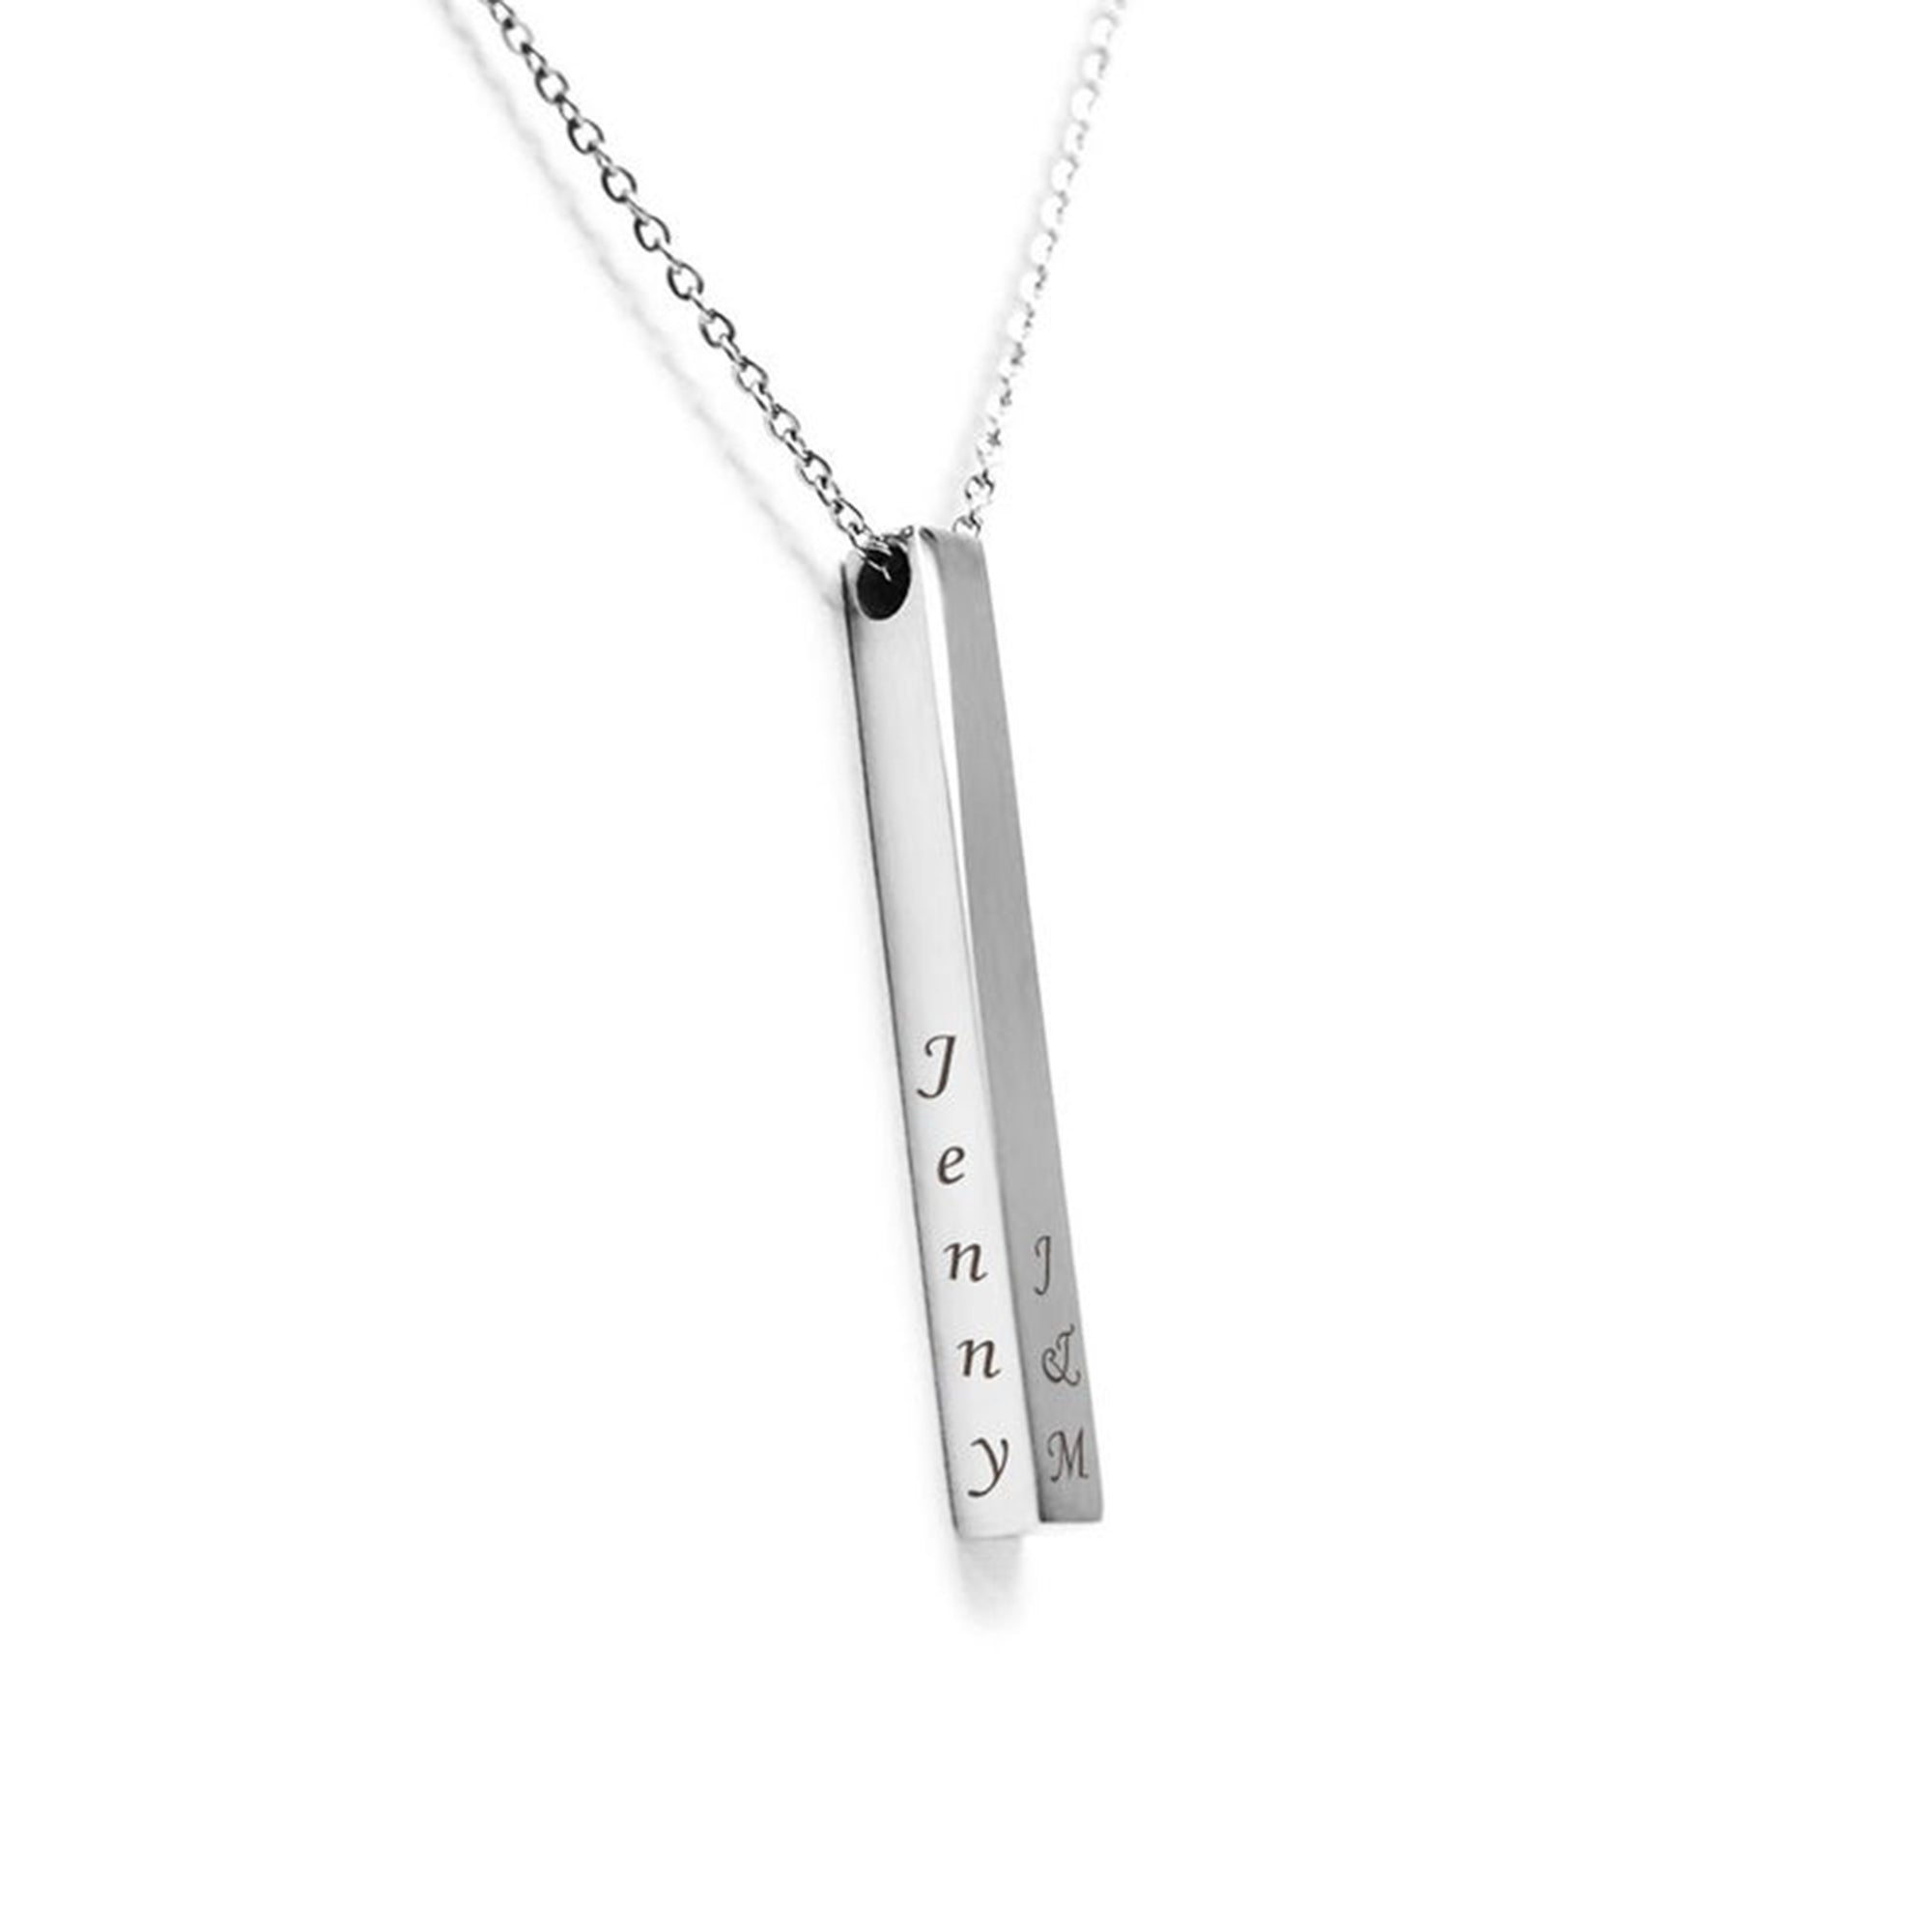  Bar necklace for men, groomsmen gift, men's necklace